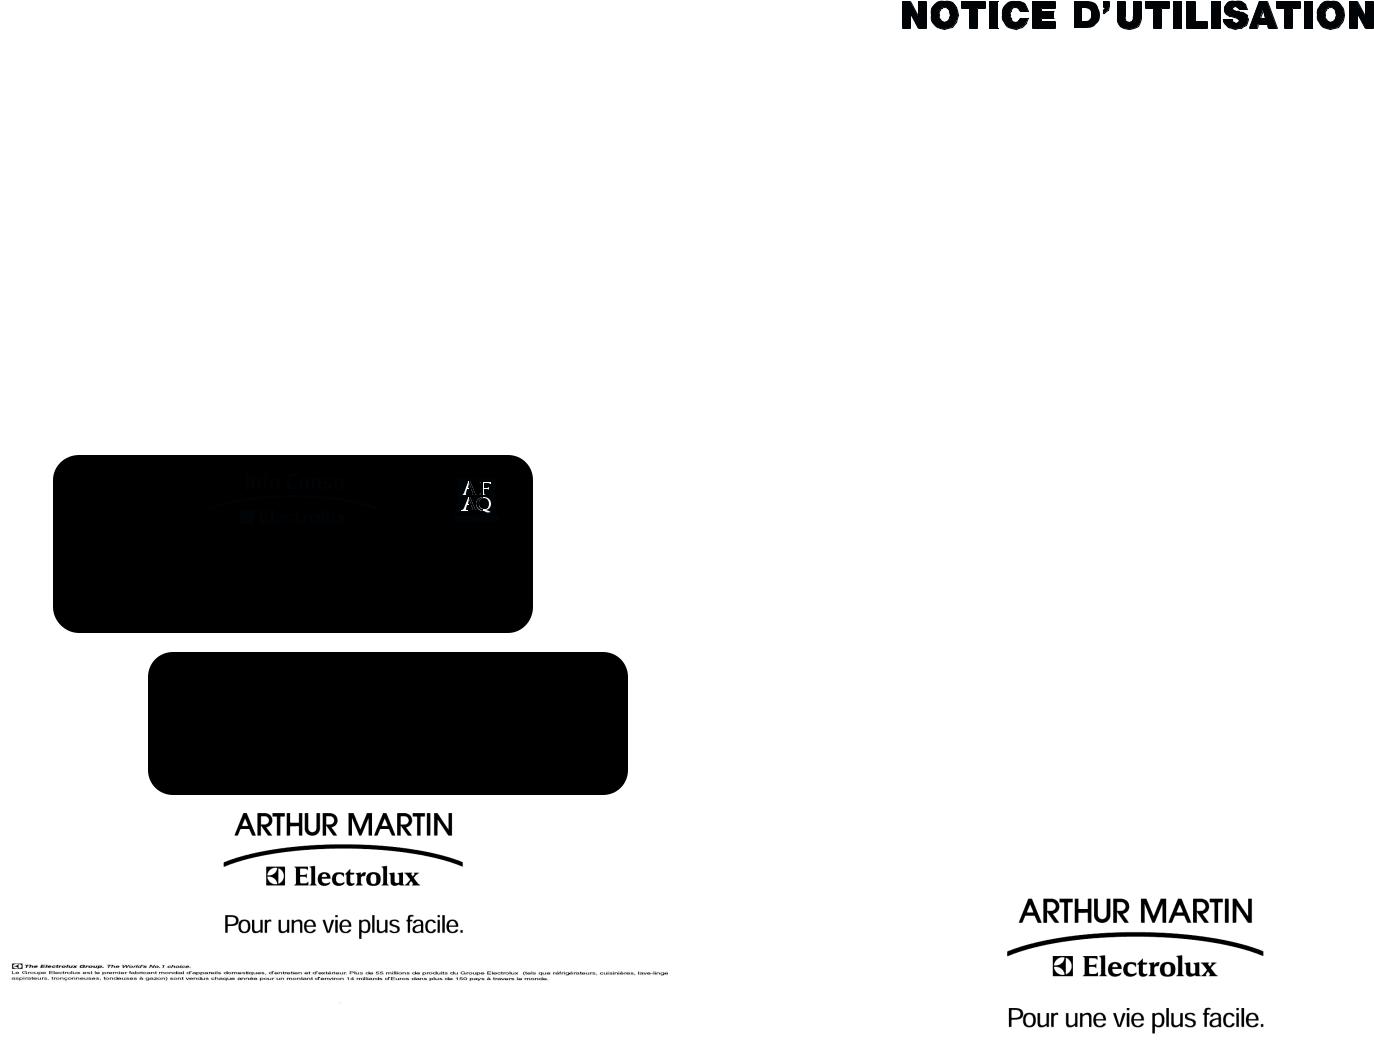 ARTHUR MARTIN AUC 2502 User Manual